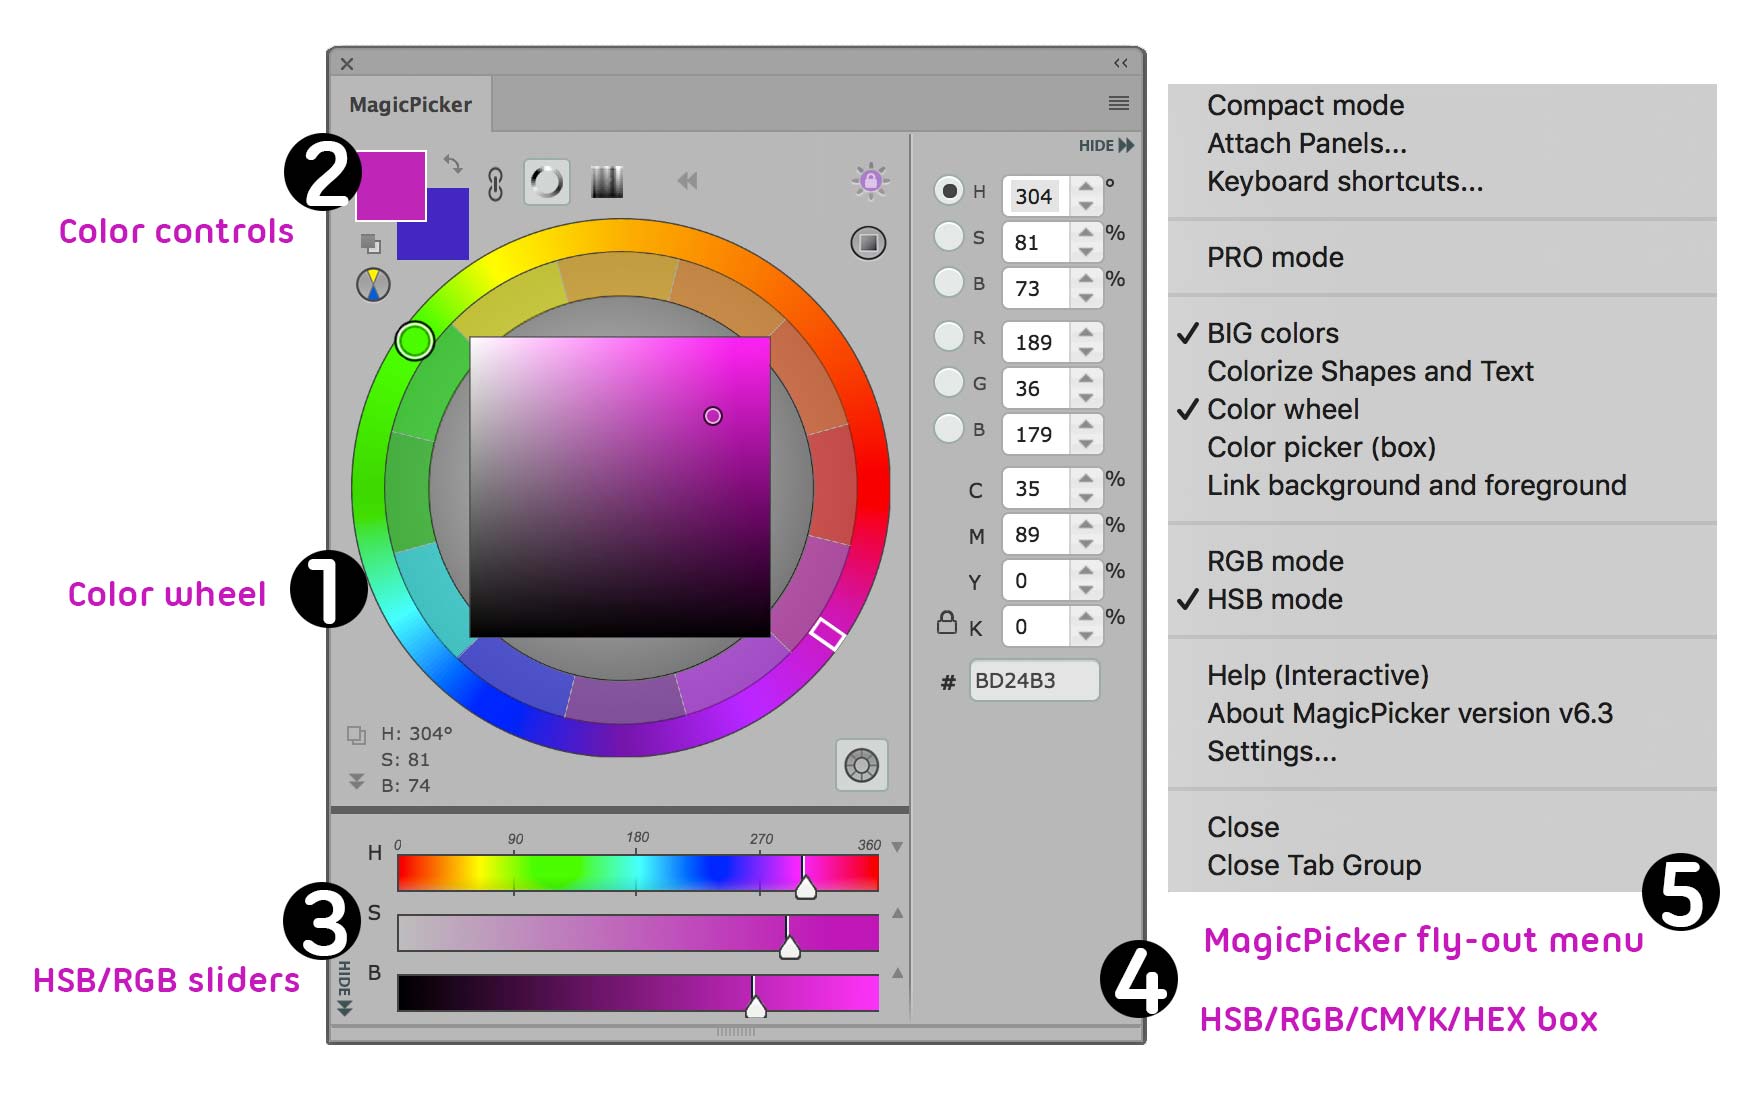 MagicPicker color wheel mode areas